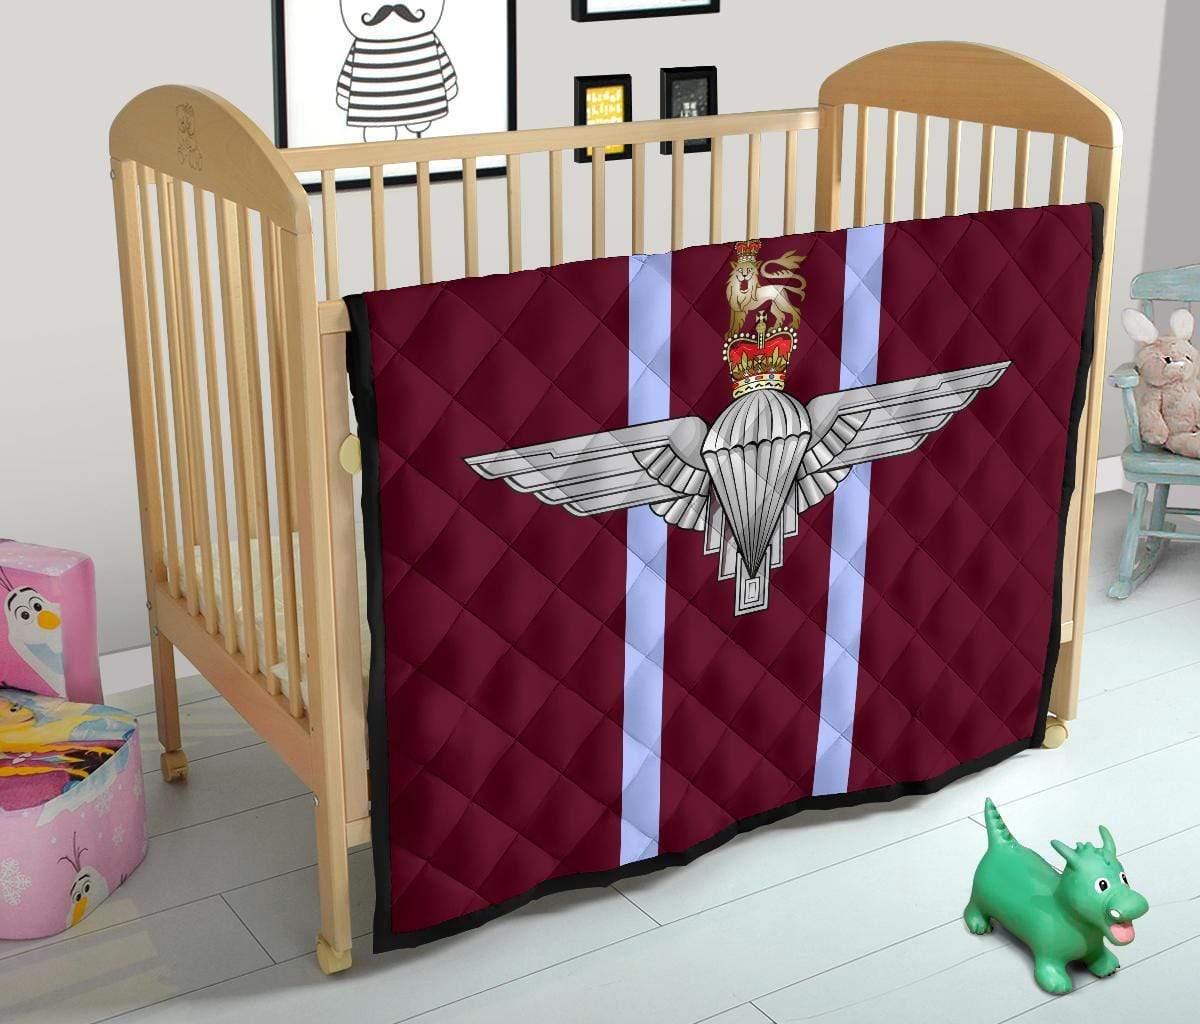 quilt Crib (45 x 50 inches / 114 x 127 cm) Parachute Regiment Quilted Blanket